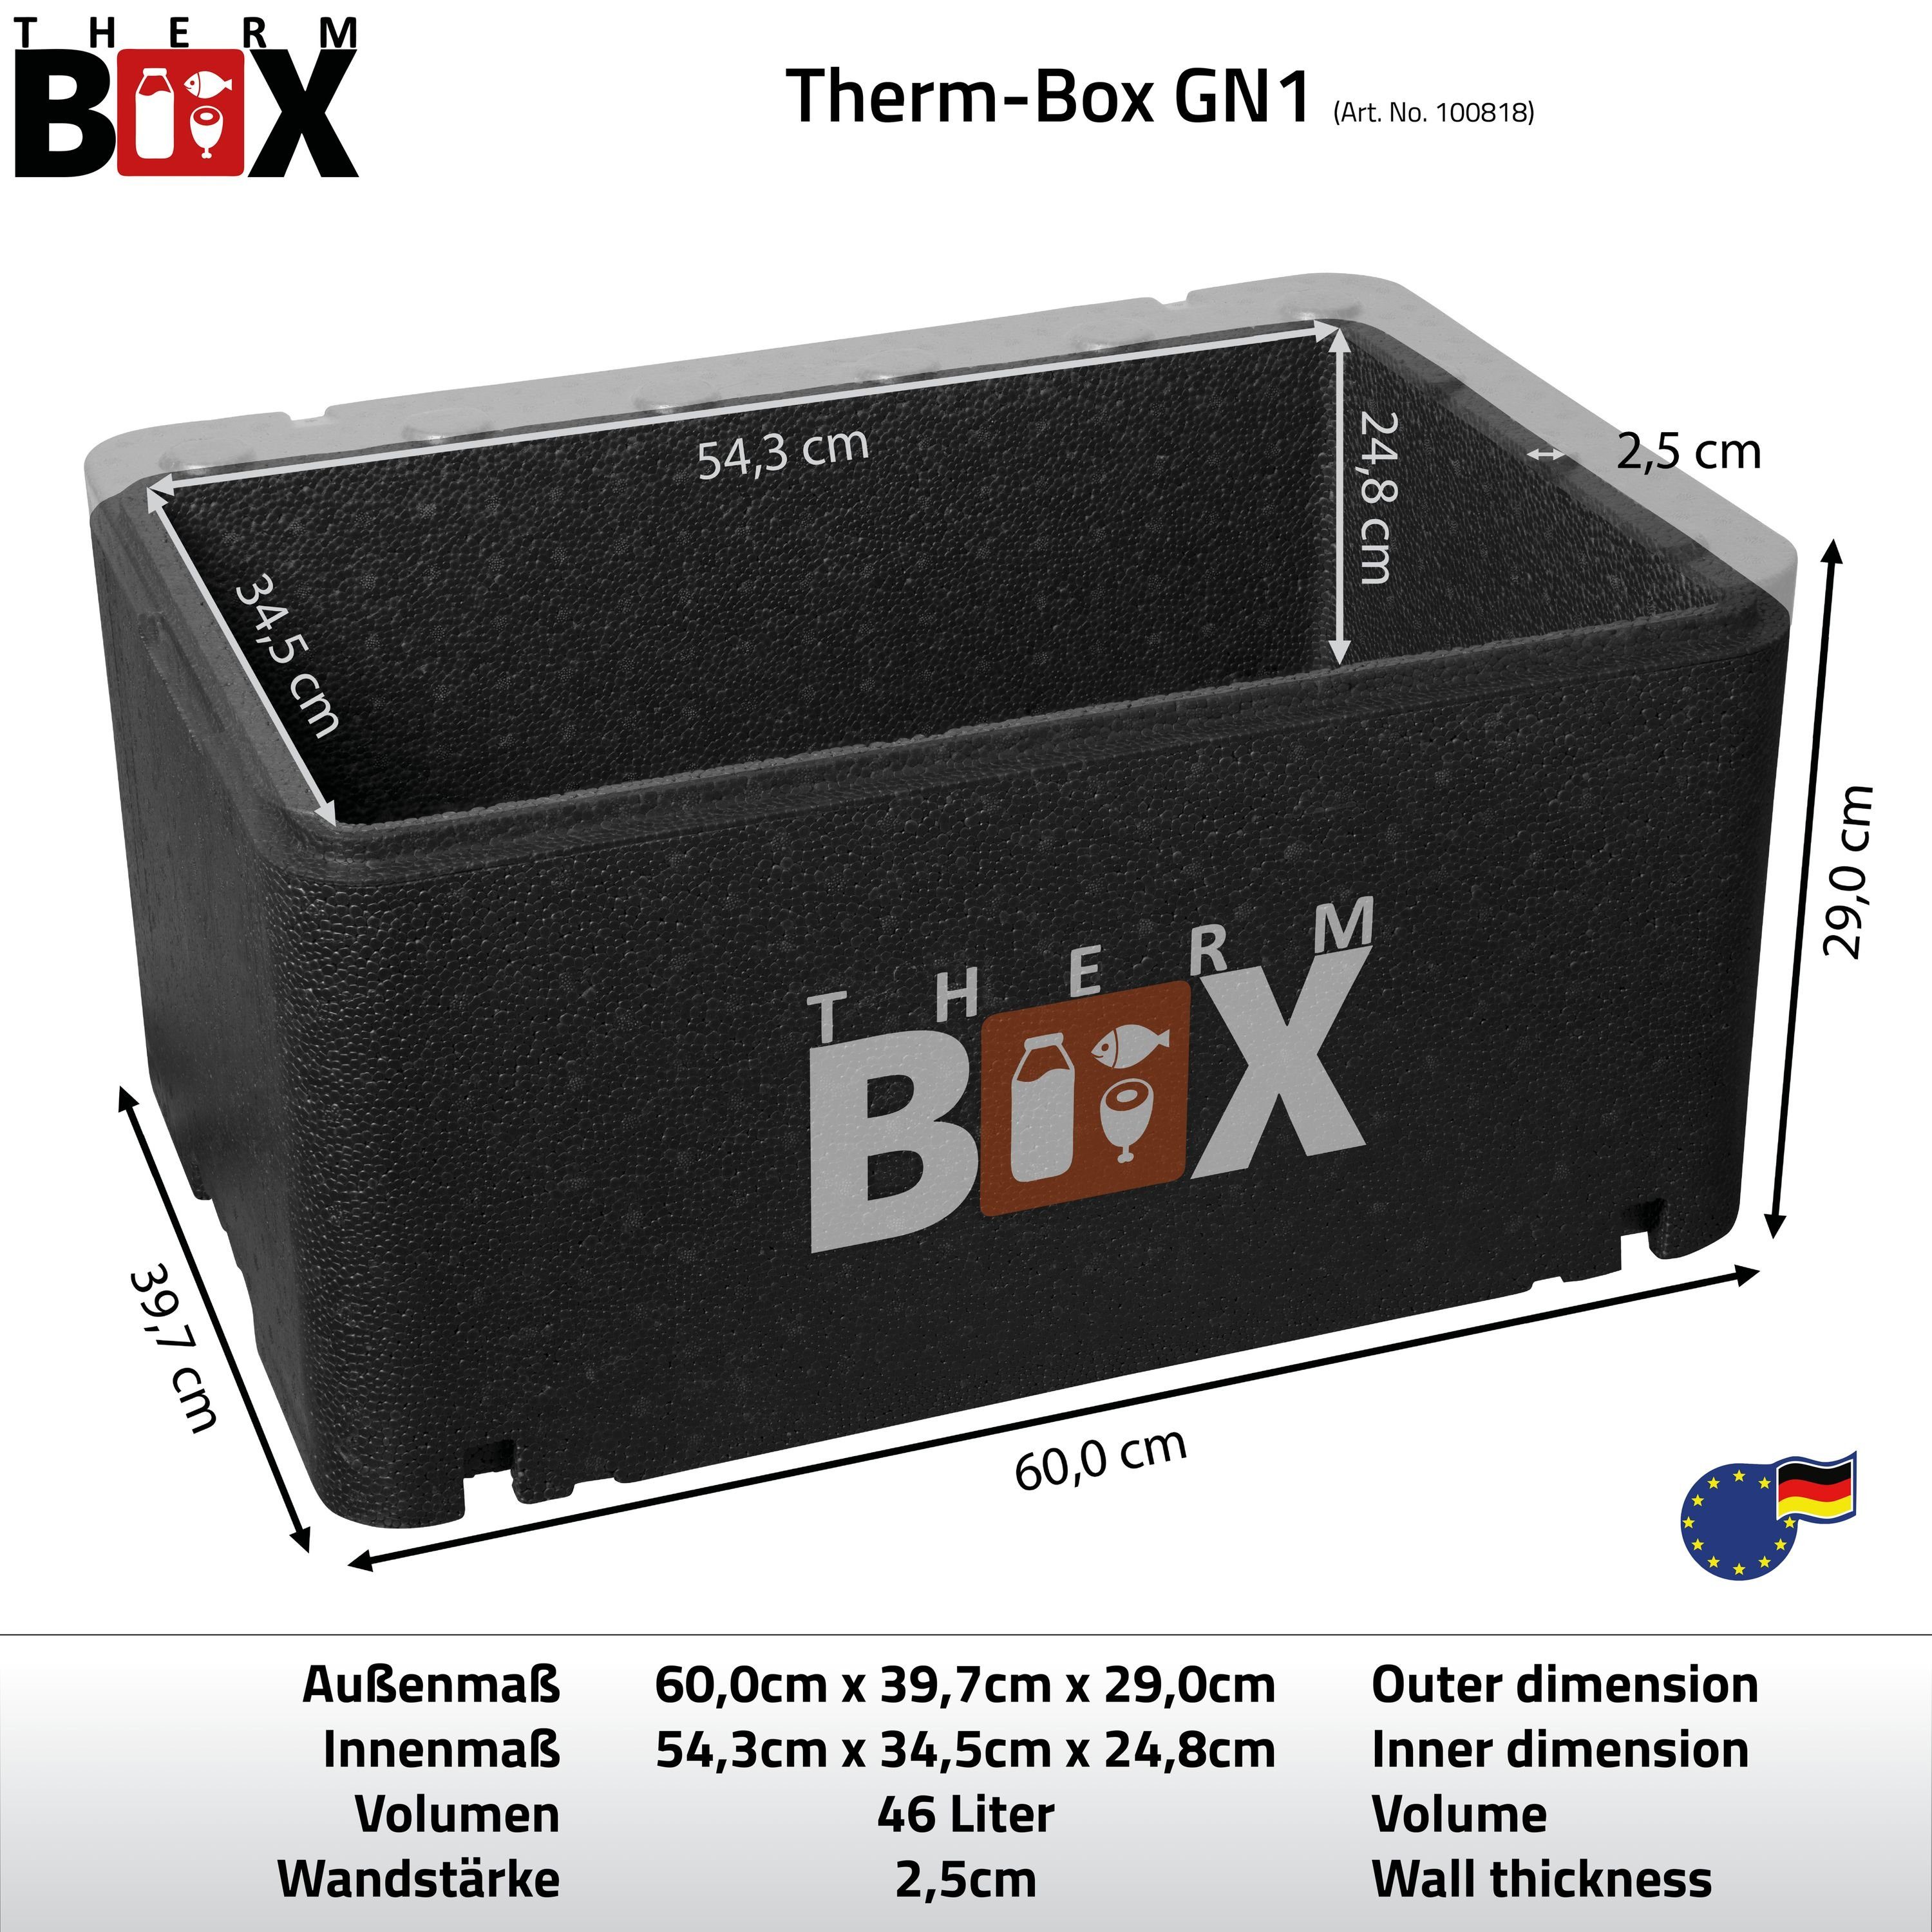 0-tlg., mit Kühlbox Thermobehälter Styropor-Piocelan, Thermobox (1, Styroporbox 2,5cm Wand: im Deckel Profibox Box Warmhaltebox Isolierbox Wiederverwendbar, THERM-BOX 54x34x24cm Karton), Innenmaß: 46,5L GN1